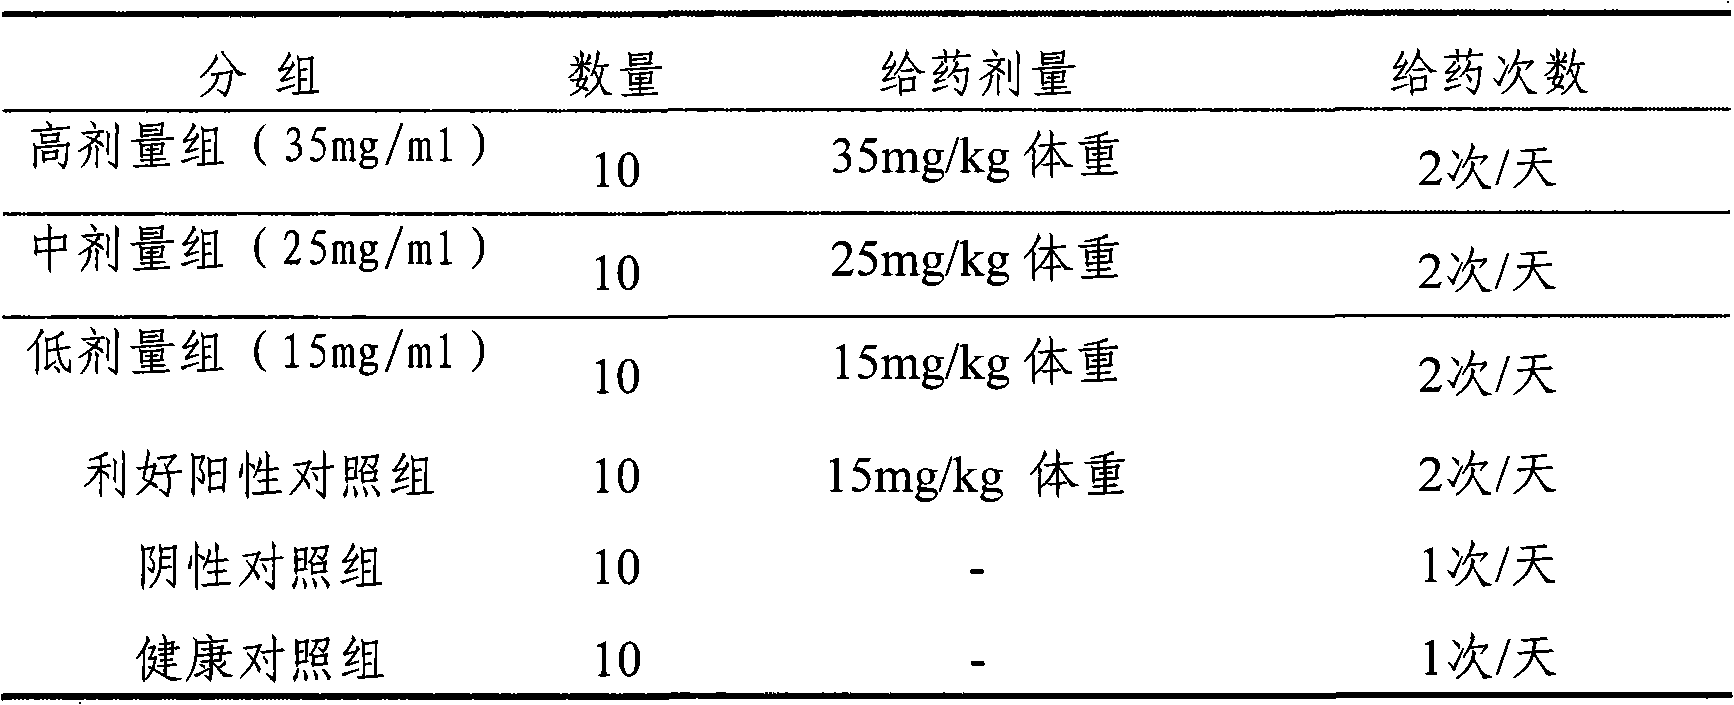 New application of p-hydroxyl cinnamic acid